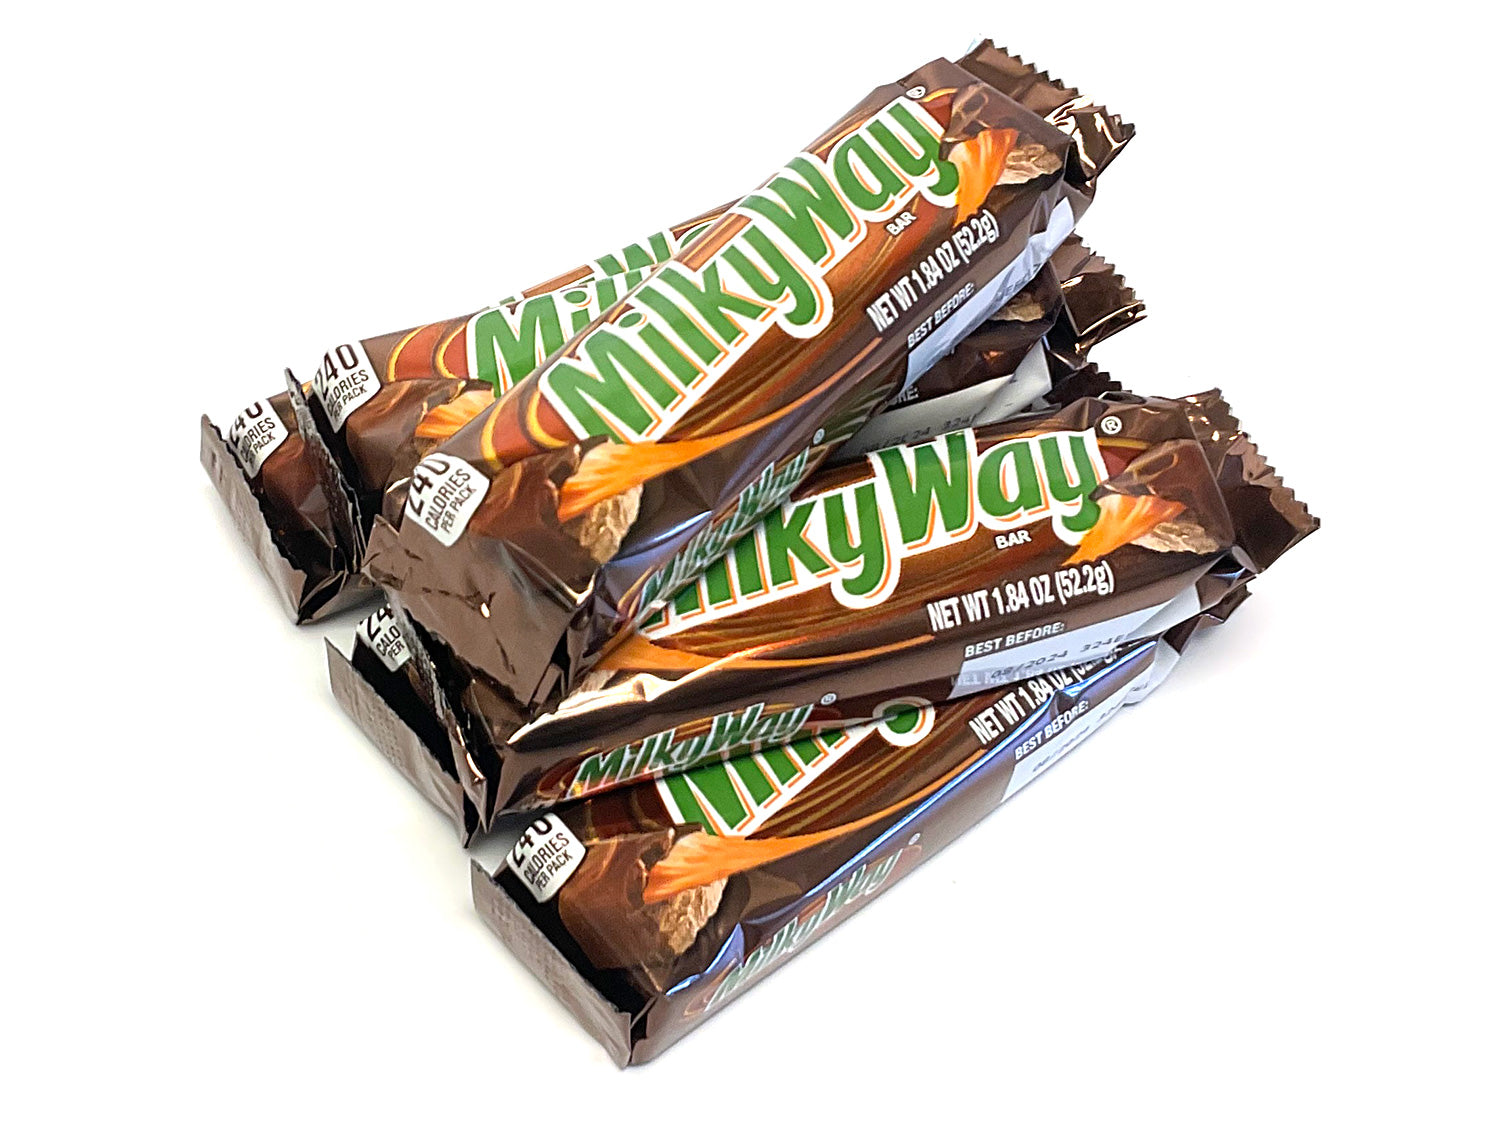 Milky Way - 1.84 oz bar - 6 bars